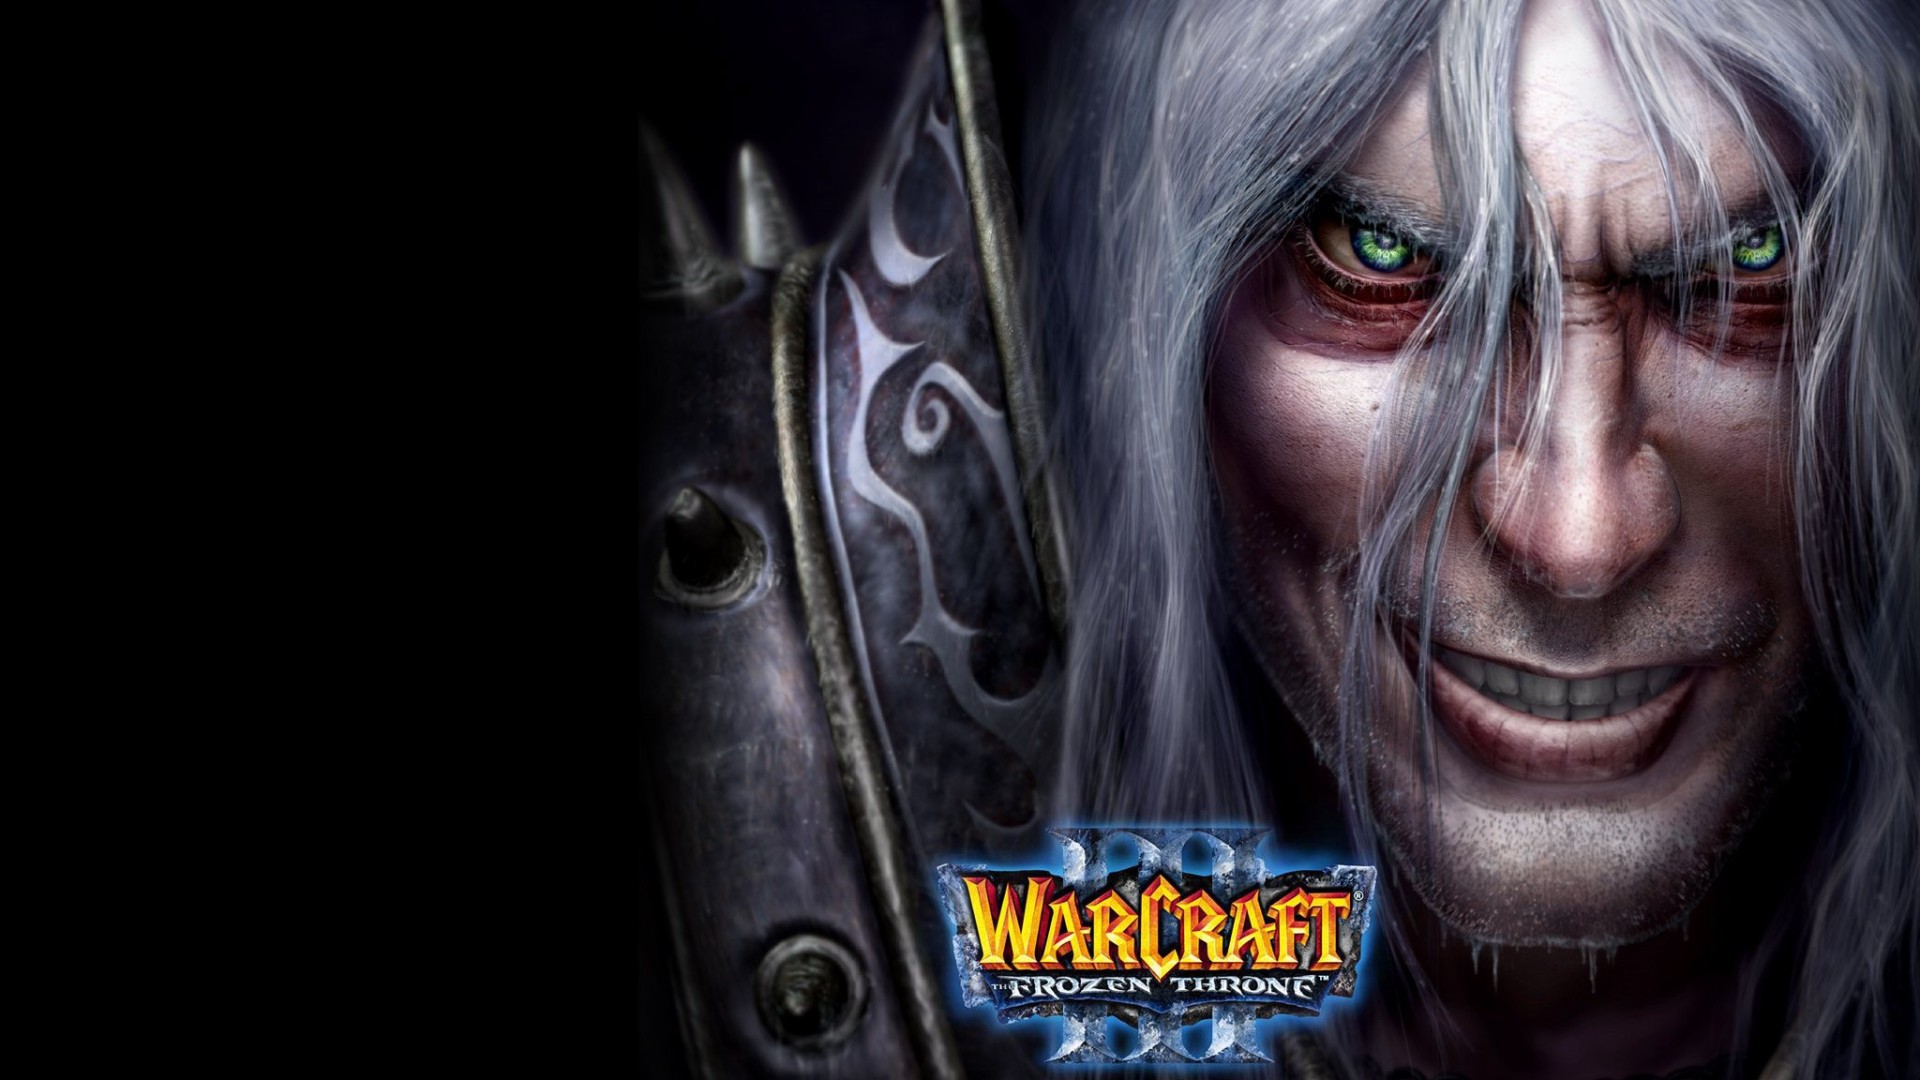 Warcraft Iii The Frozen Throne Arthas Menethil 1920x1080